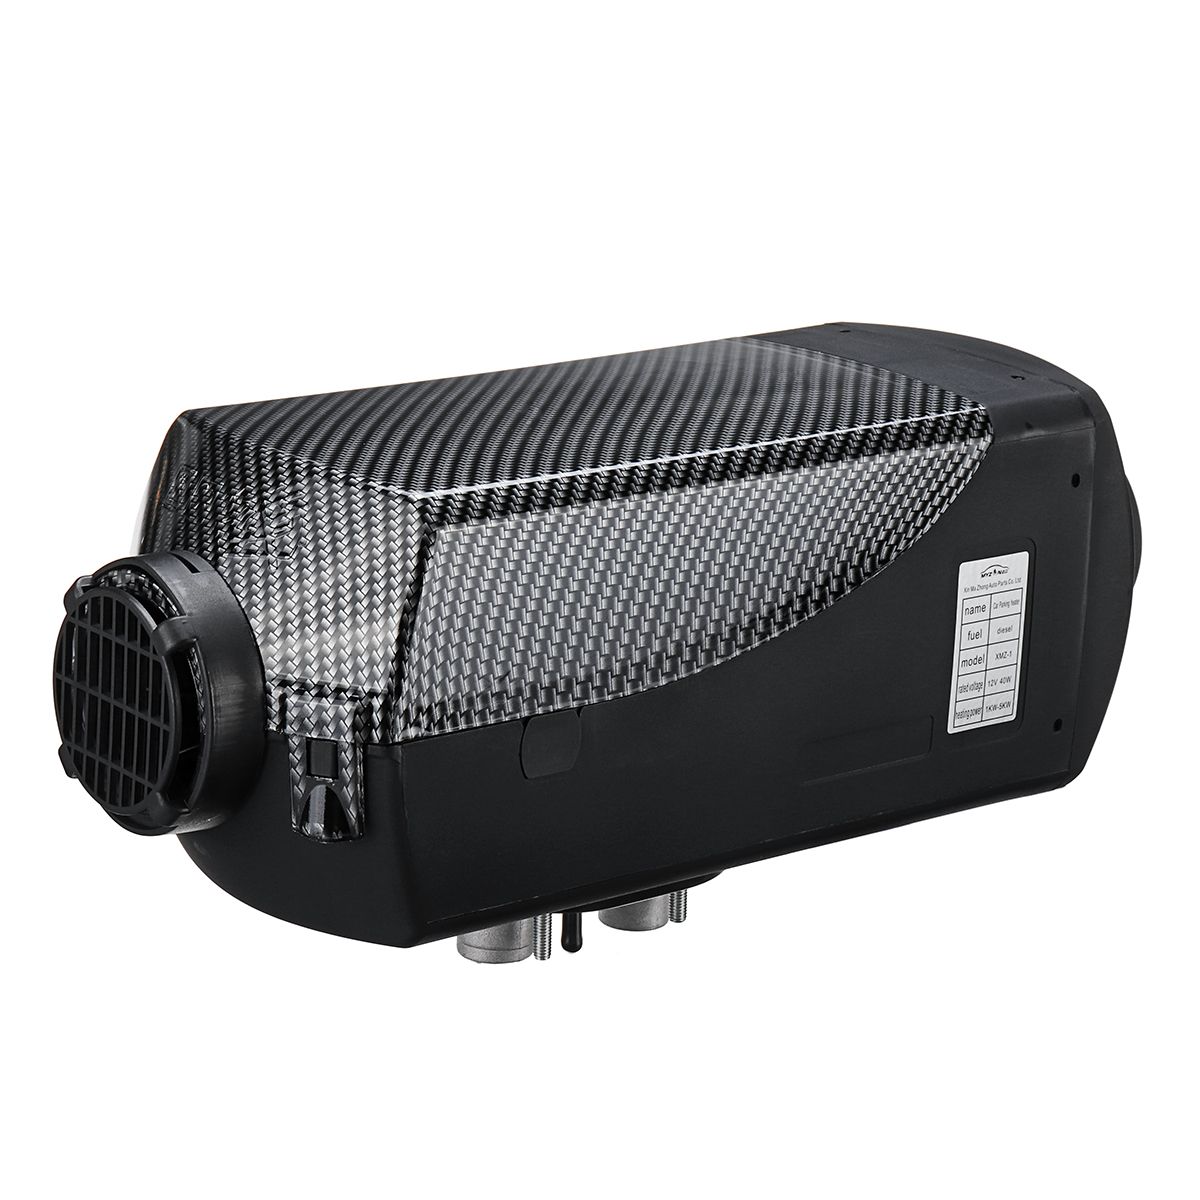 8KW-12V-Car-Diesel-Air-Parking-Heater-Black-Carbon-Fiber-Color-with-Blue-LCD-Thermostat-Remote-Silen-1565894